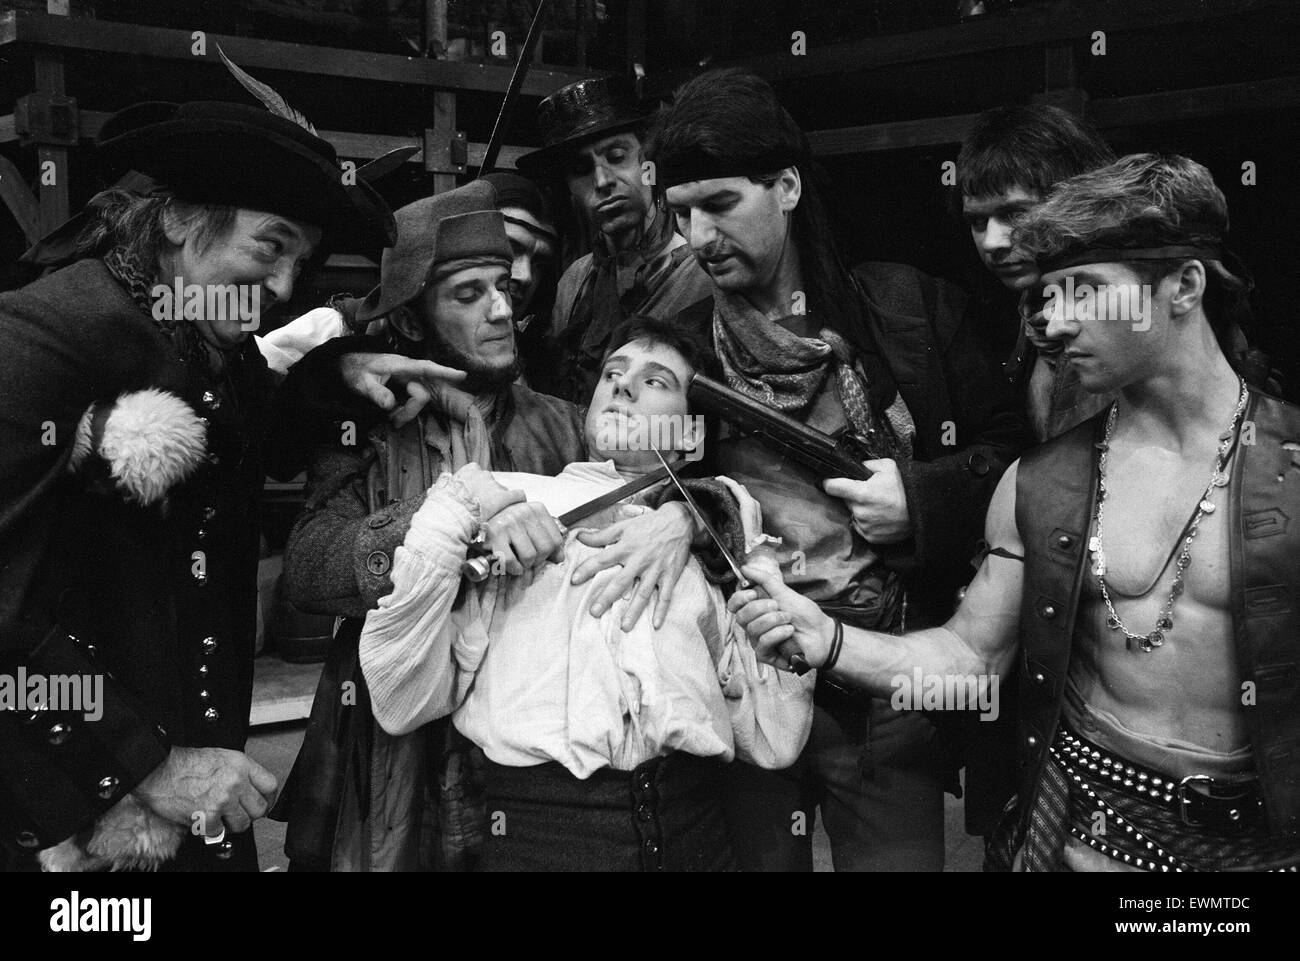 Treasure Island, Pantomime, Photo-call, Birmingham Repertory Theatre, Birmingham, 20th December 1984. Jack Douglas, comedian, plays Long John Silver. Stock Photo